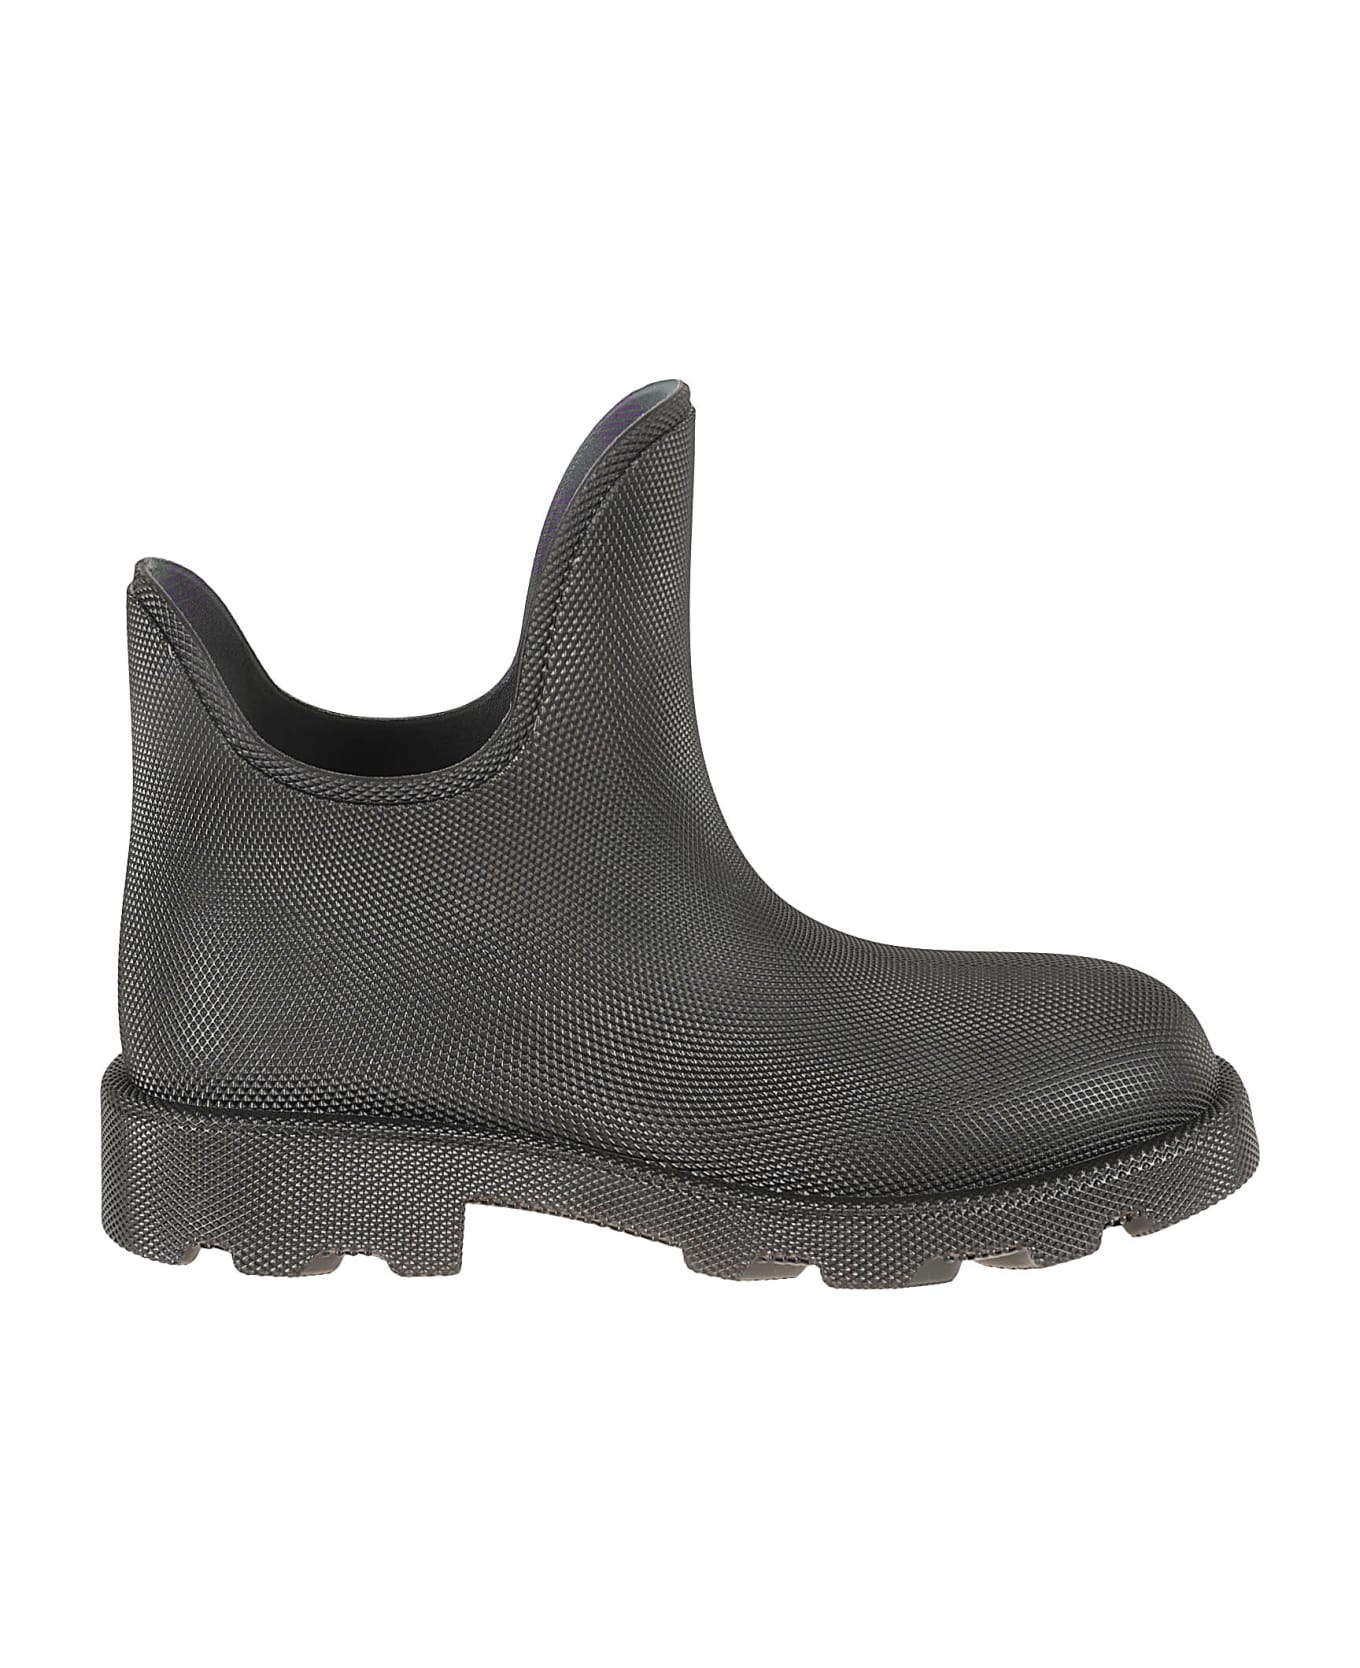 Burberry Marsh Low Boots - Black ブーツ